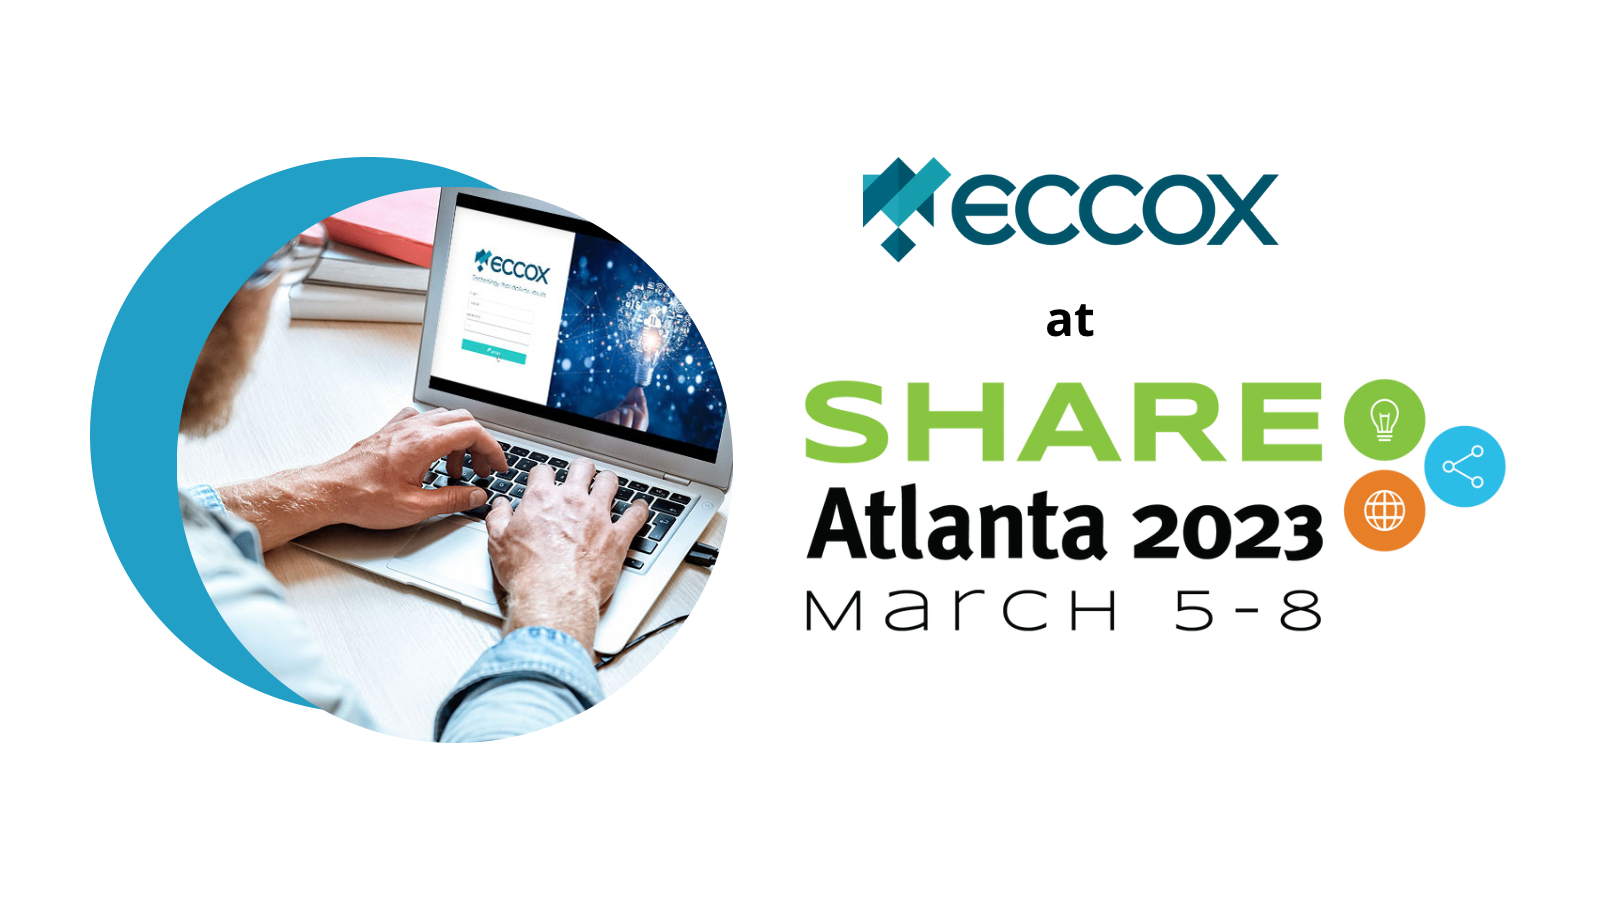 Eccox logo and SHARE logo